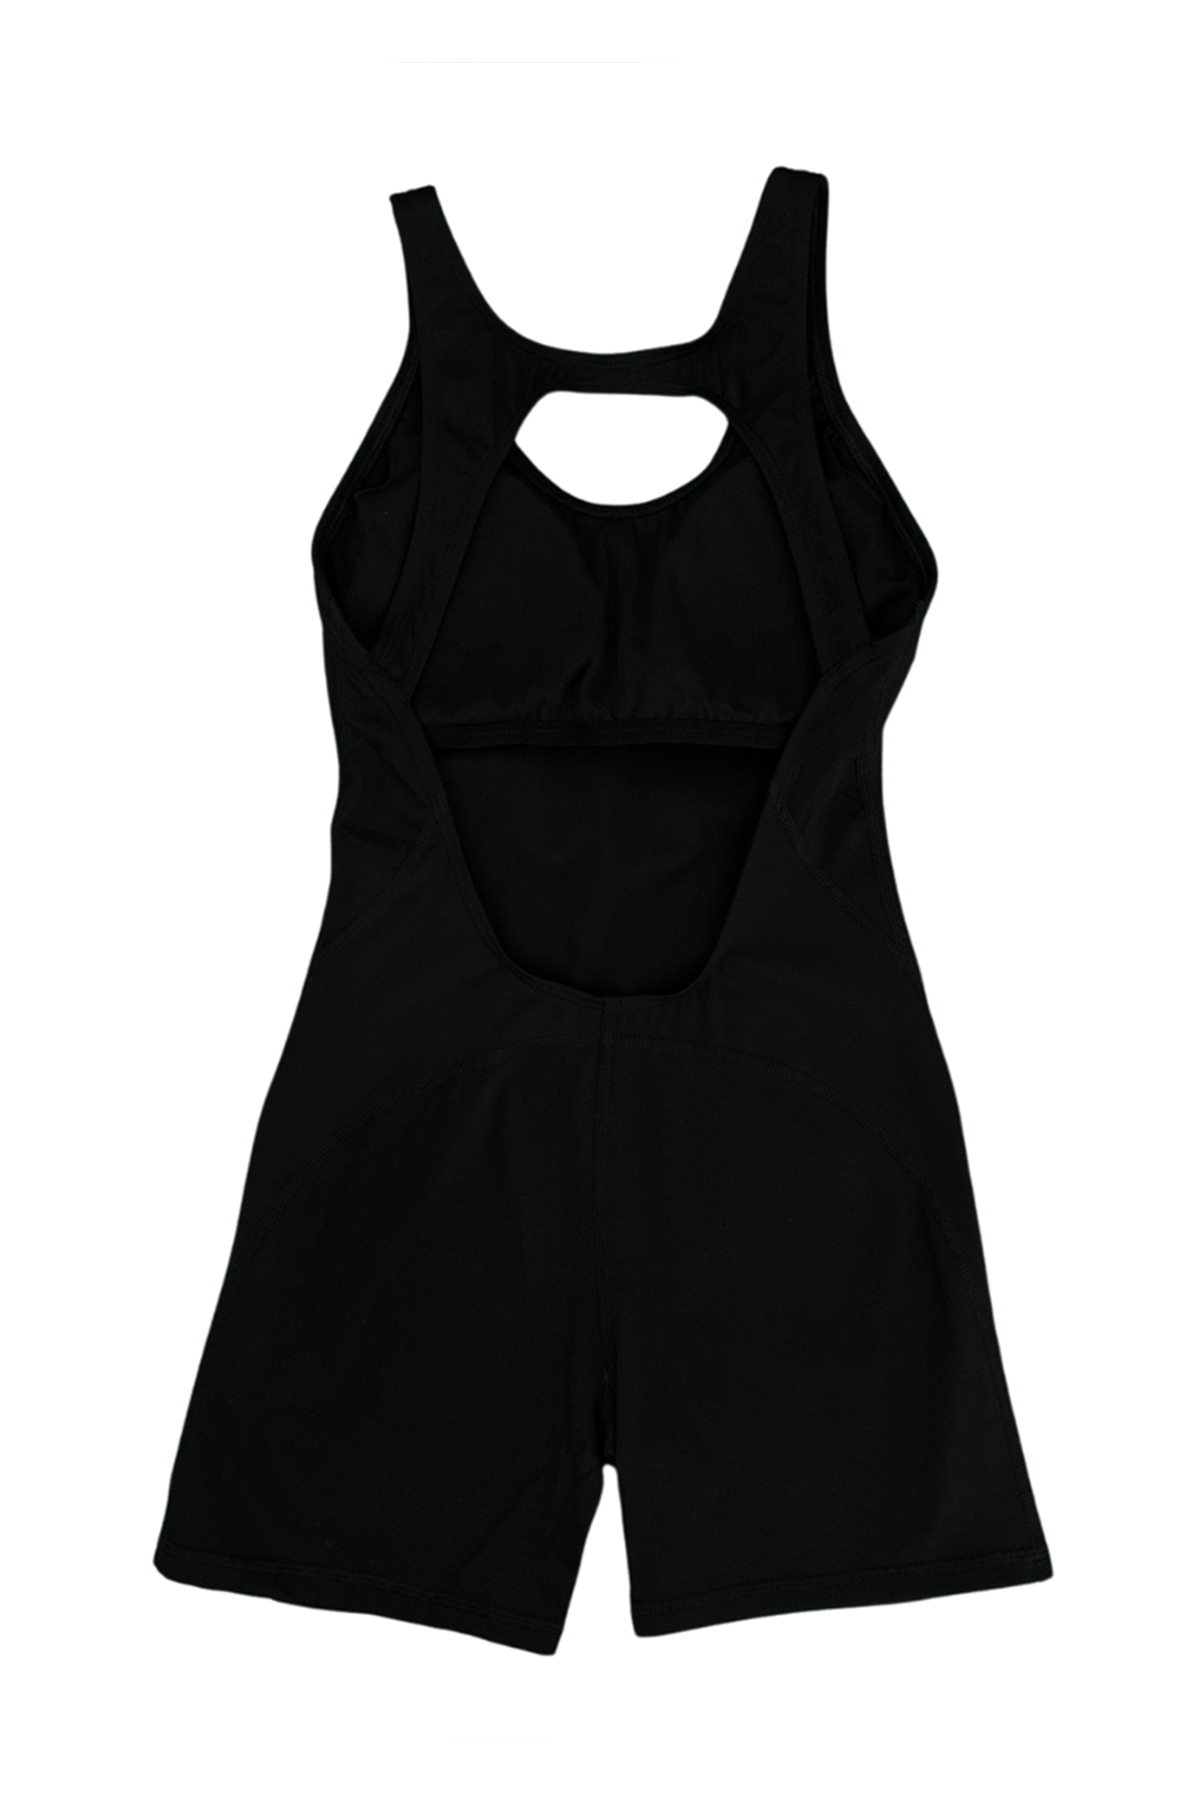 Mini-Short-Cut-out-Bodysuit-for-Exercising-black-back